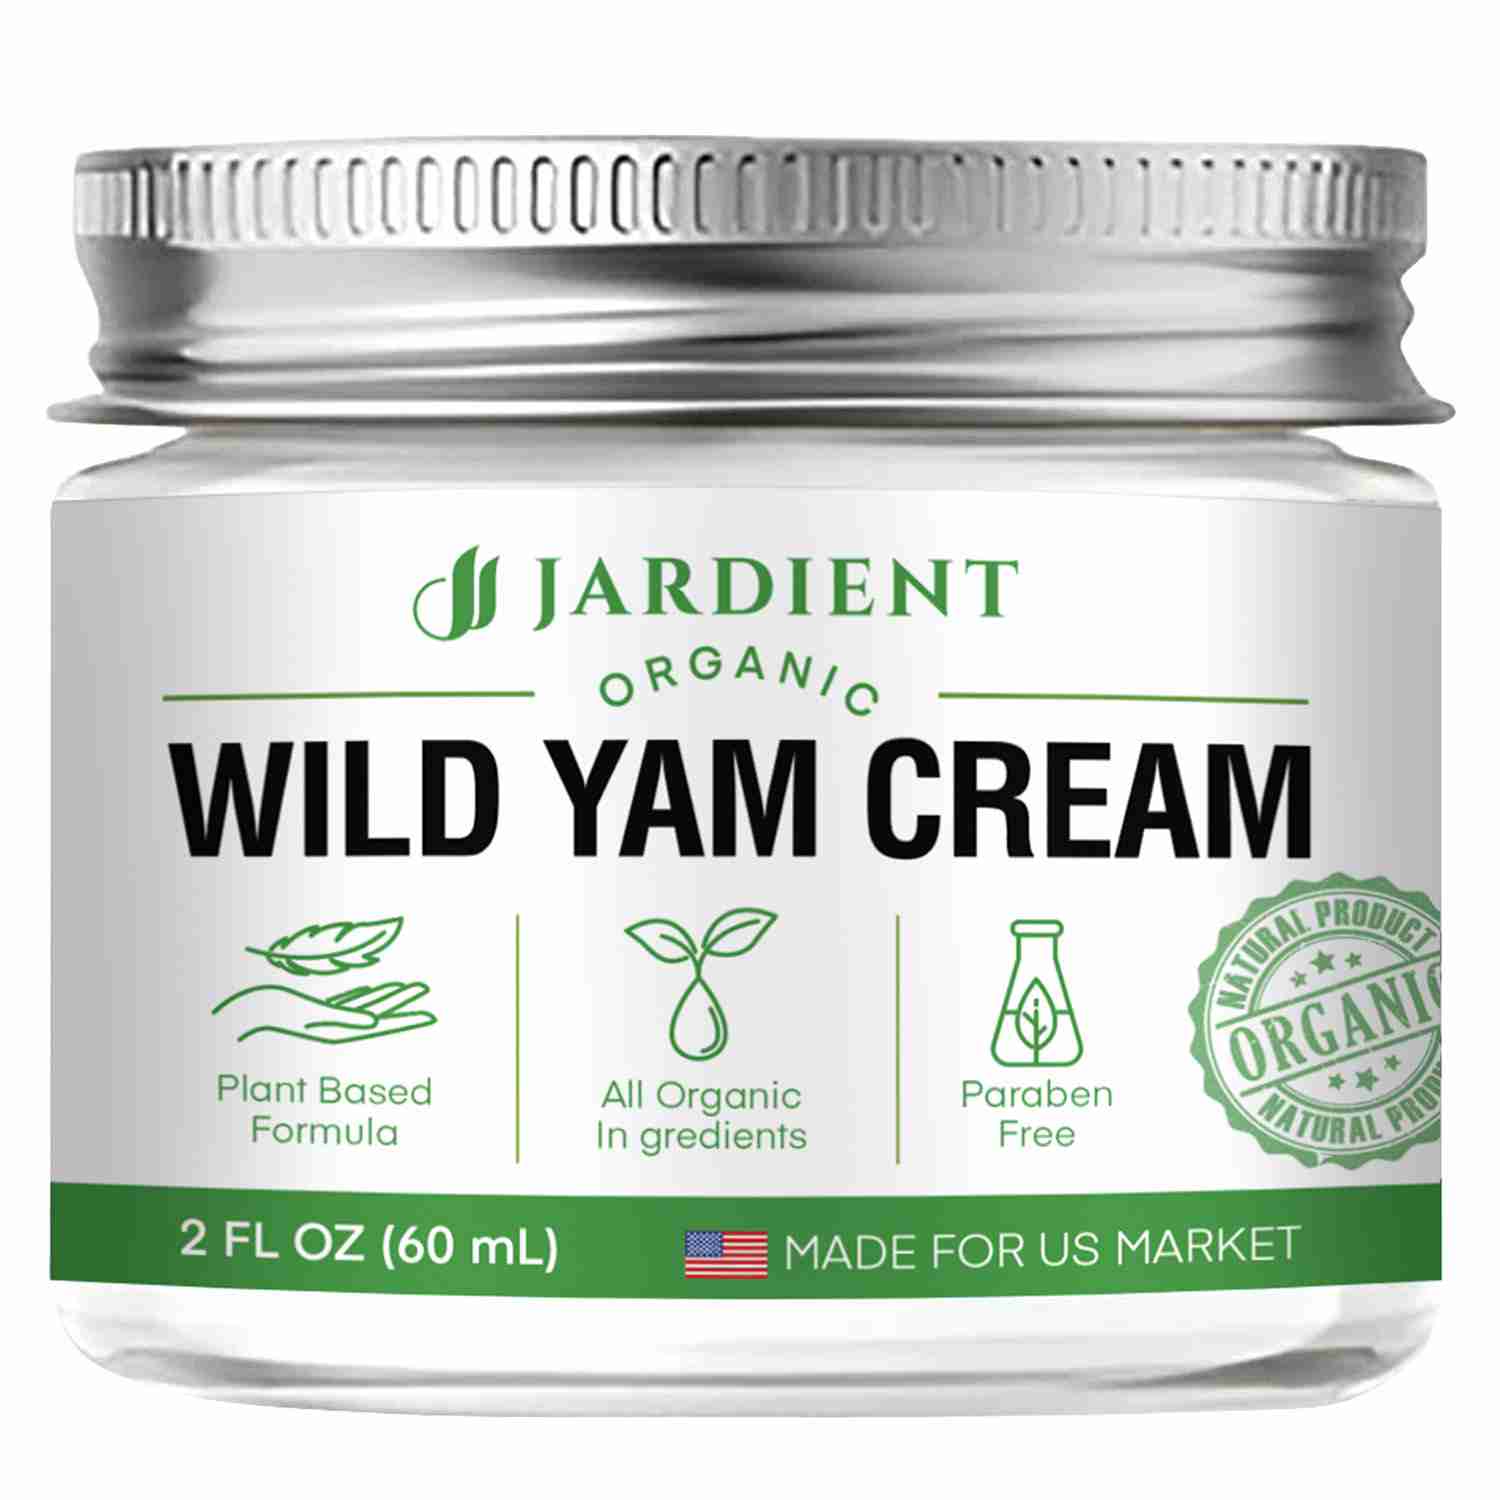 wild-yam-cream with cash back rebate